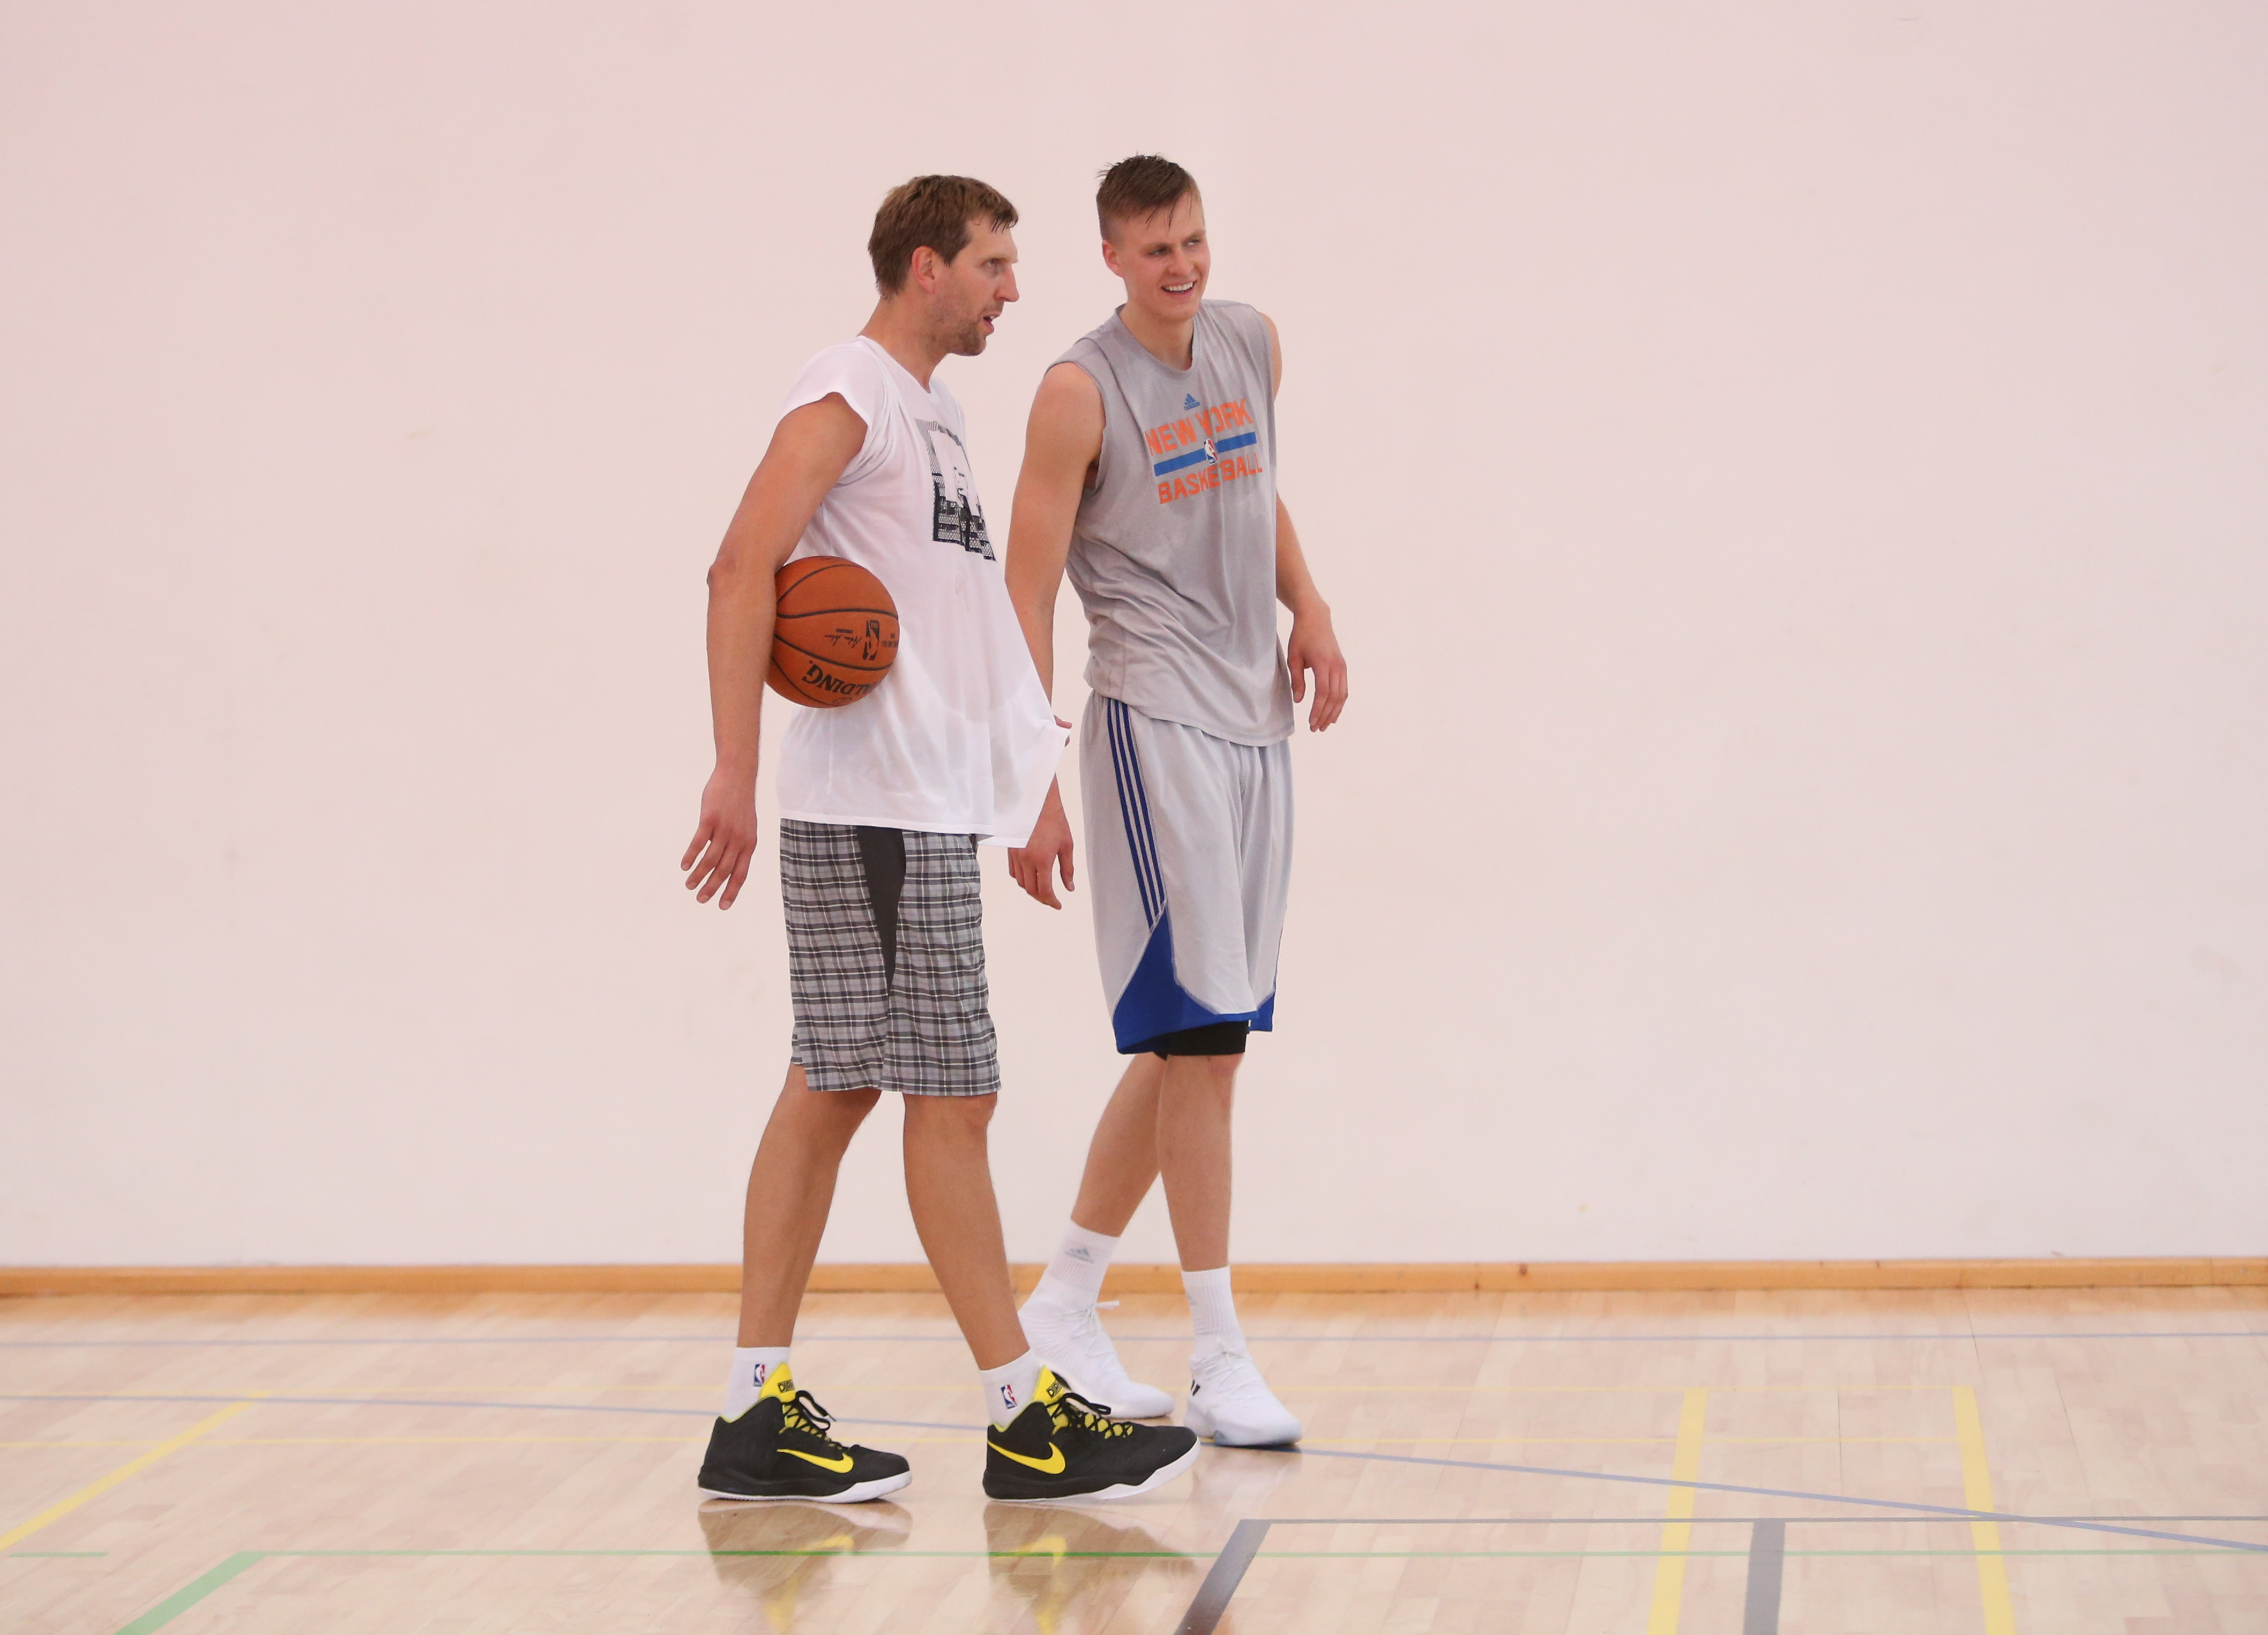 Knicks rookie Kristaps Porzingis wants to follow in Dirk